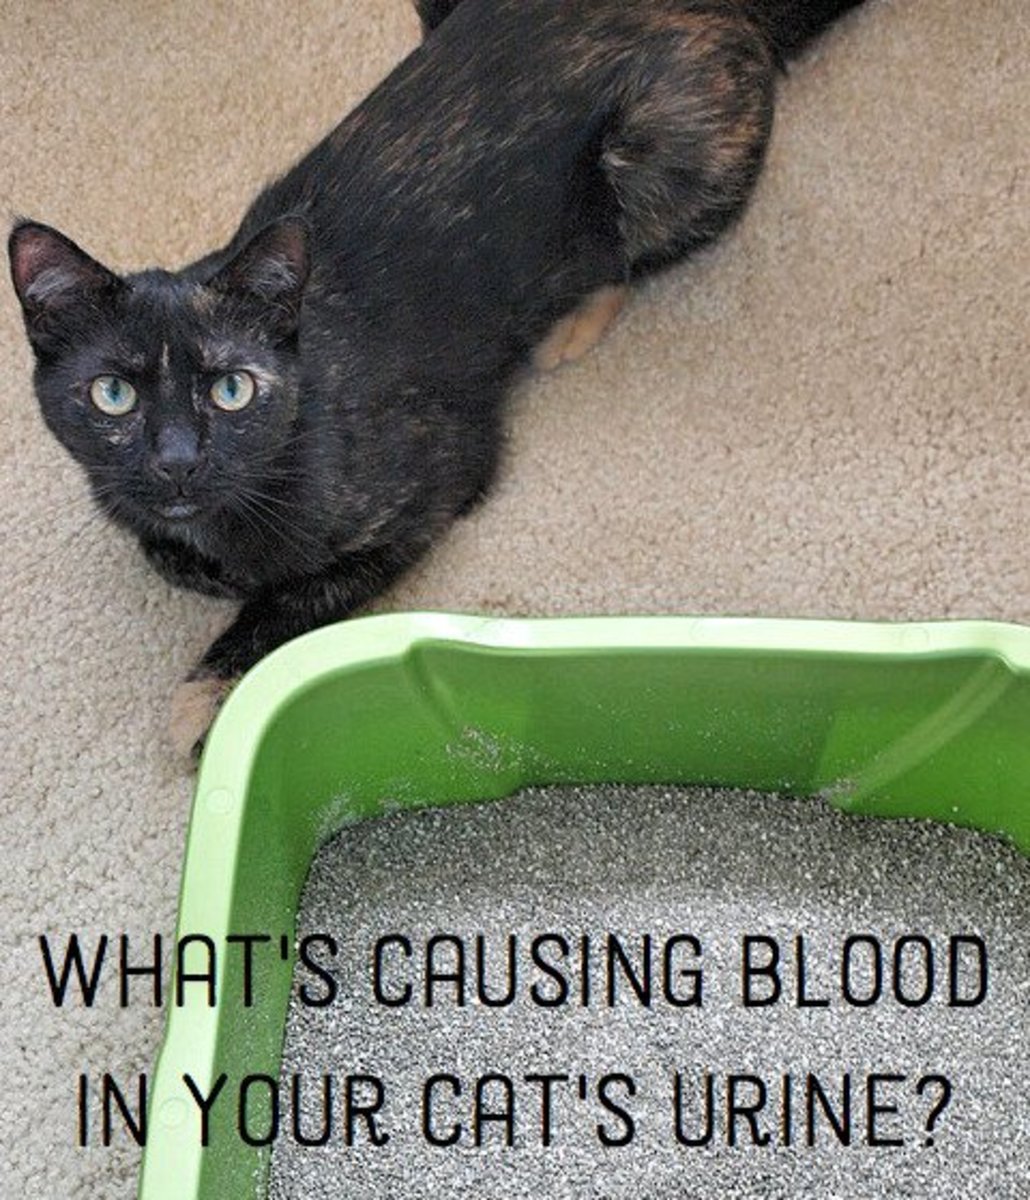 Cat Urine Color Chart